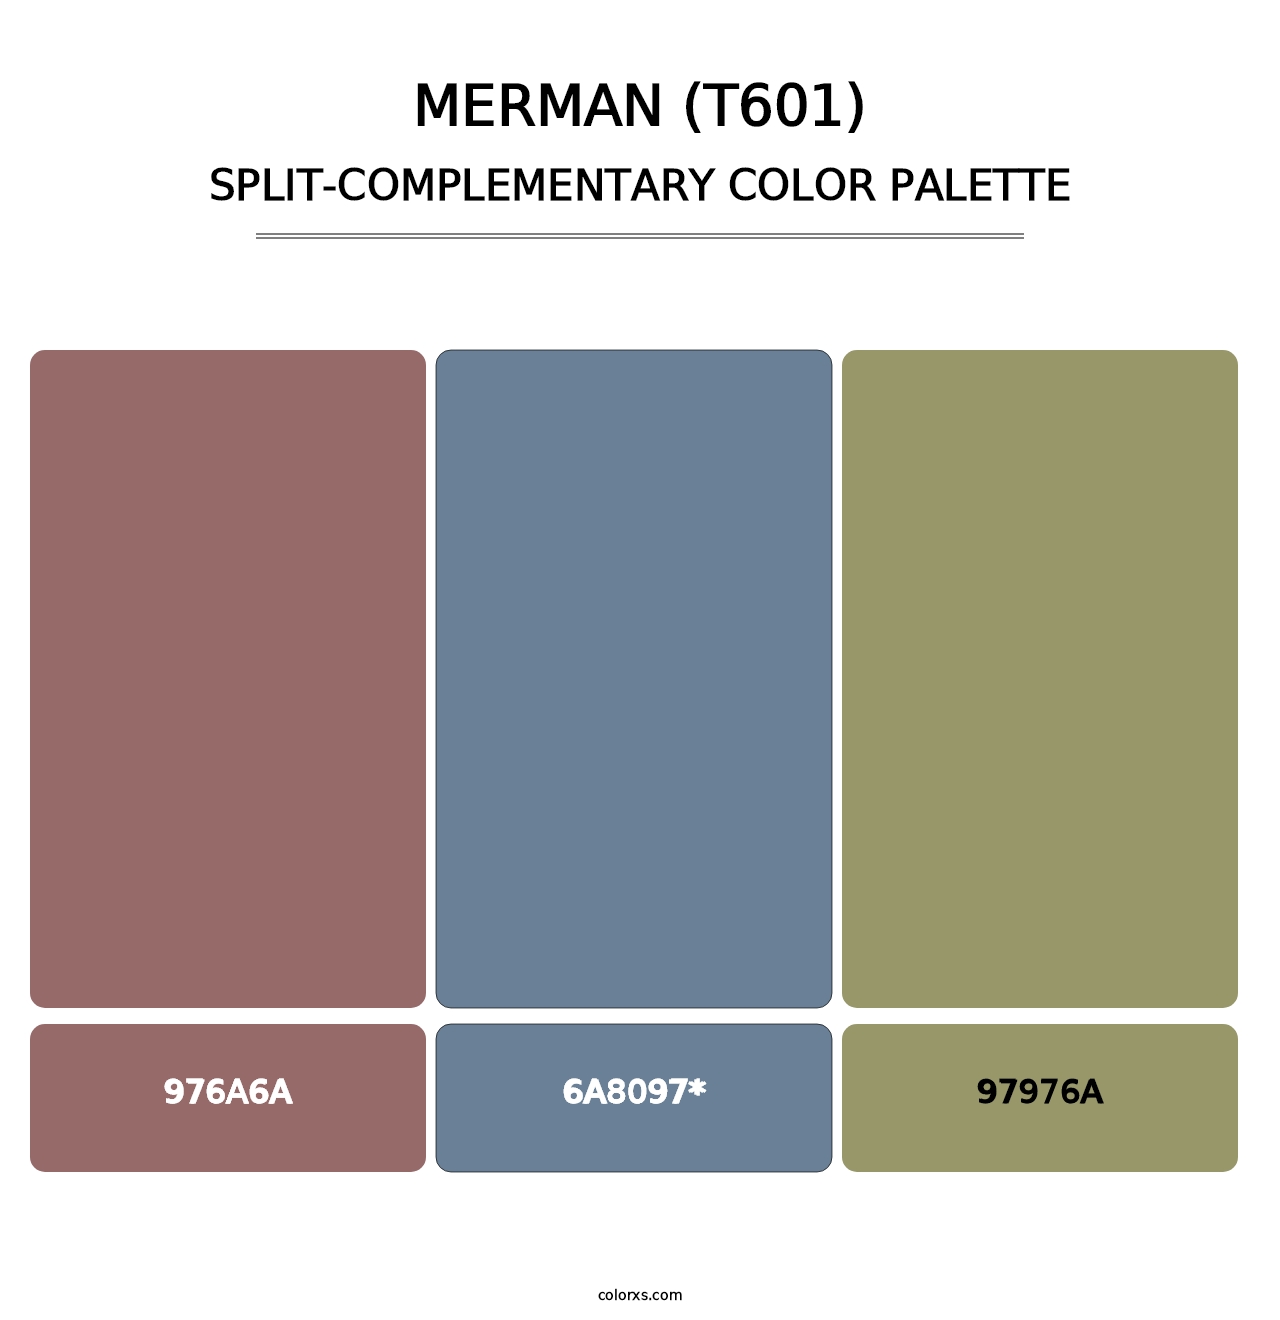 Merman (T601) - Split-Complementary Color Palette